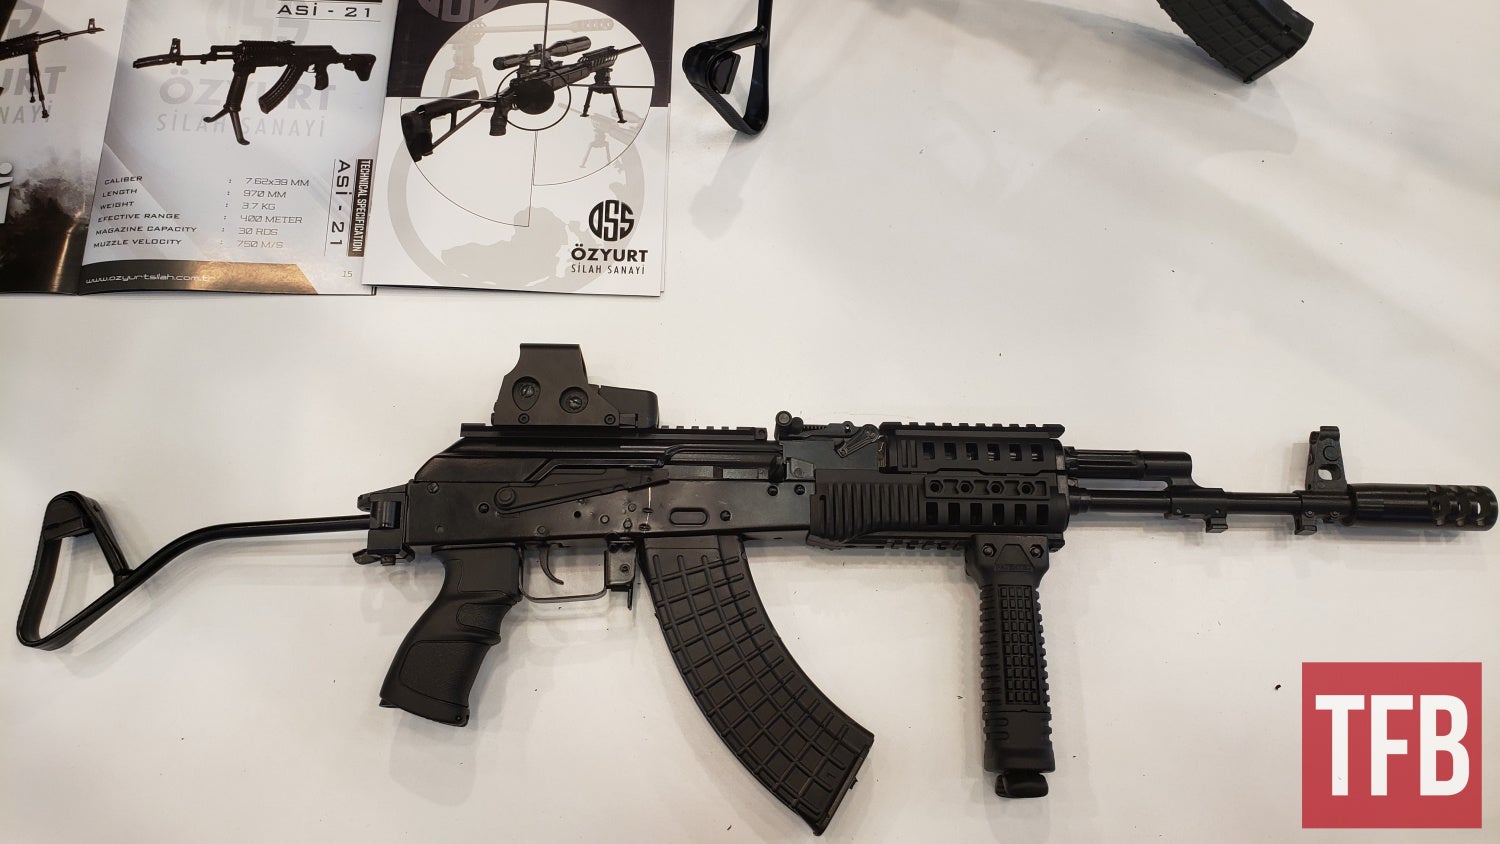 ASİ – 21, AK rifle produced by Özyurt Arms